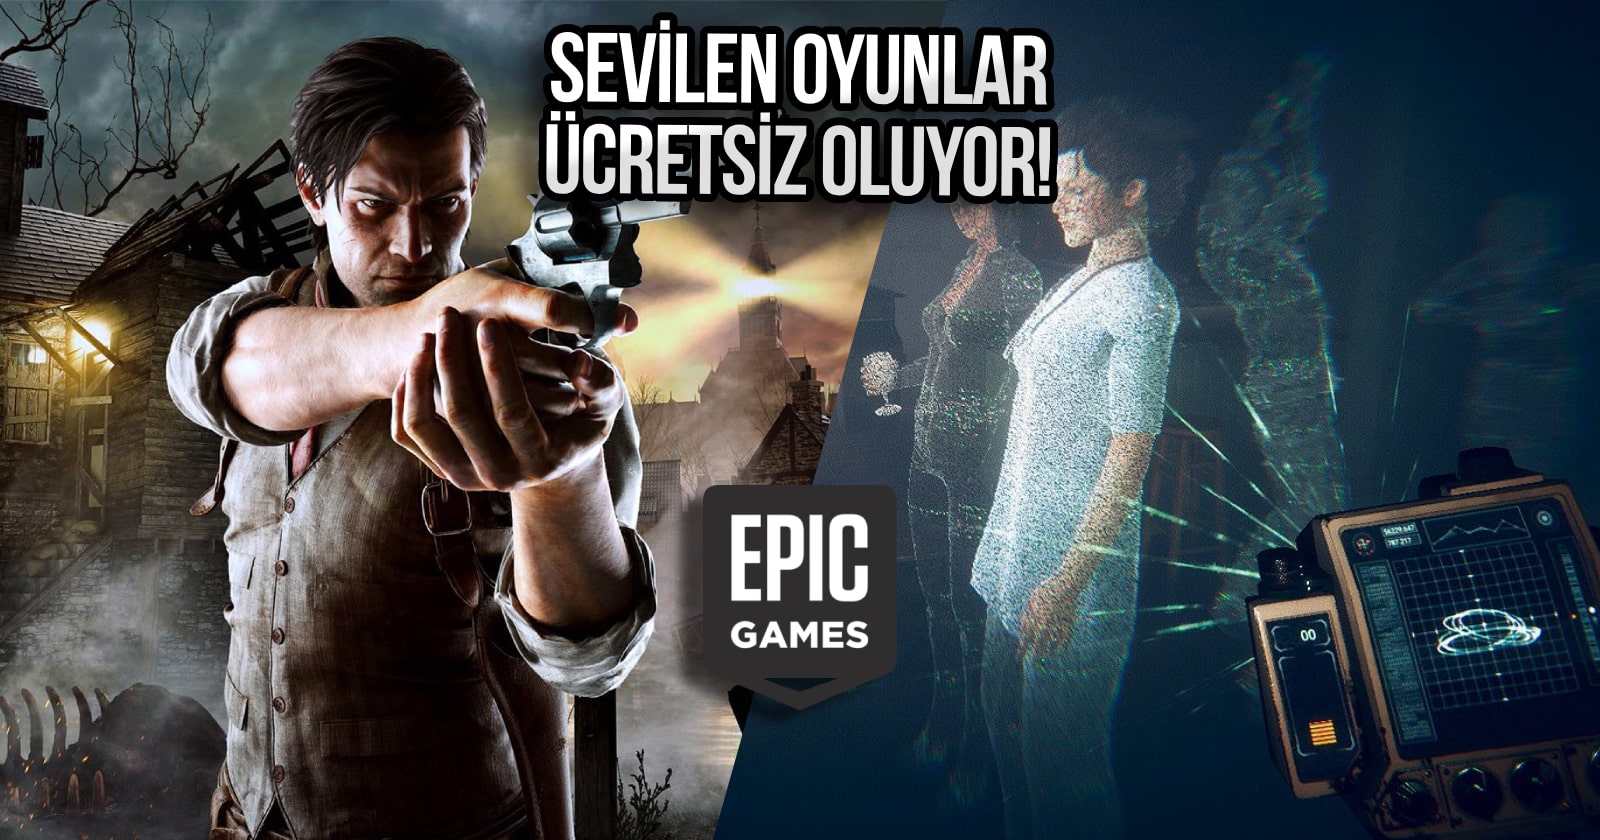 epic-games-the-evil-within-ucretsiz-oyun-KAPAK-min.jpg